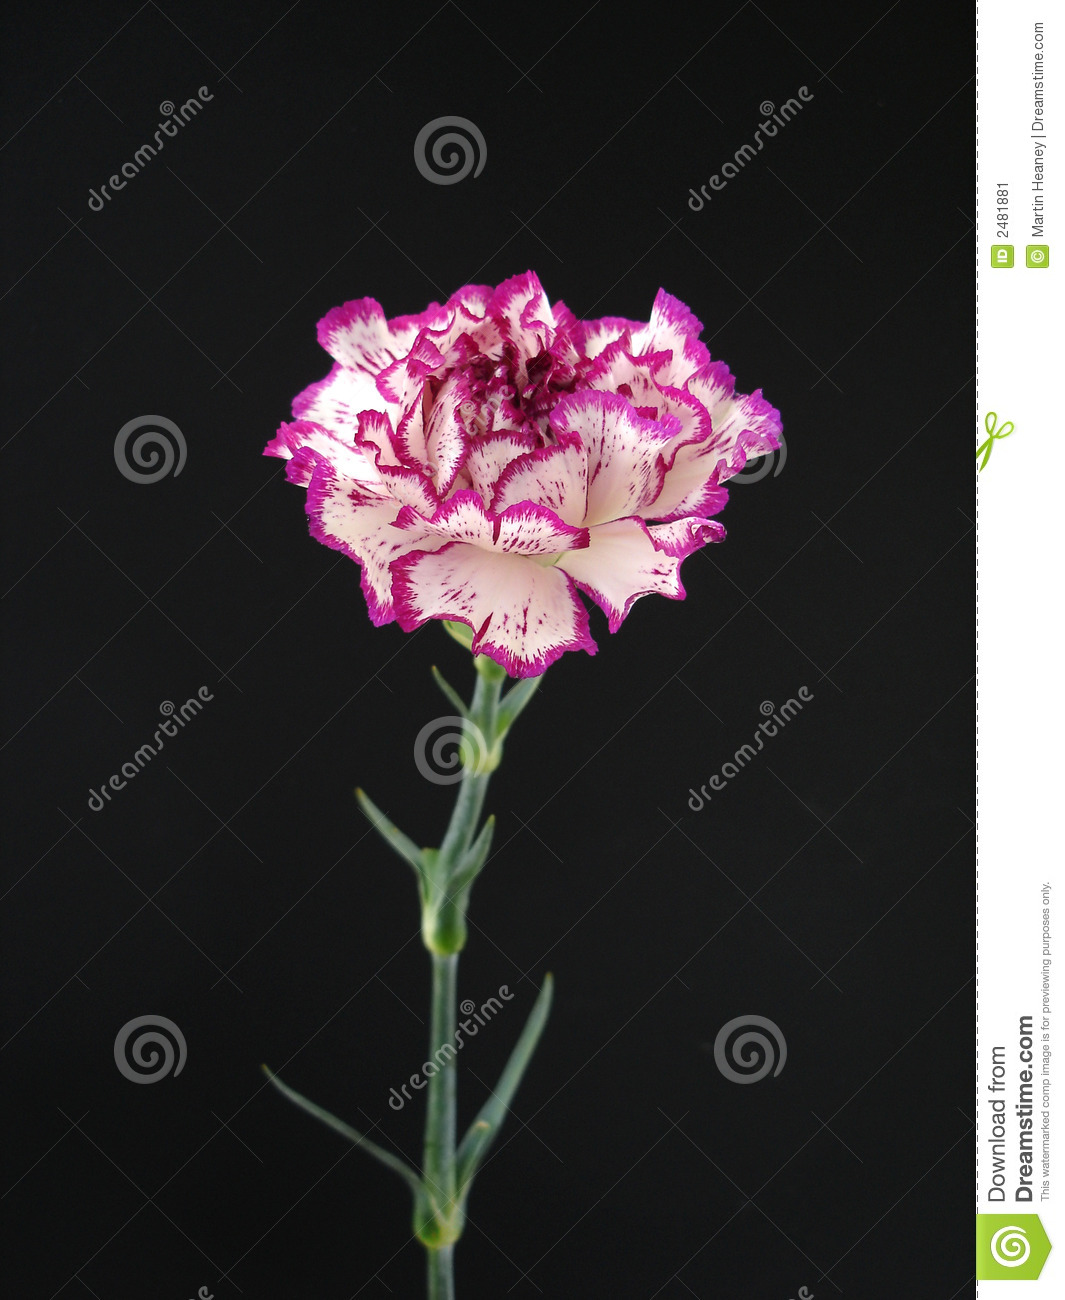 White And Purple Carnation Stock Image   Image  2481881